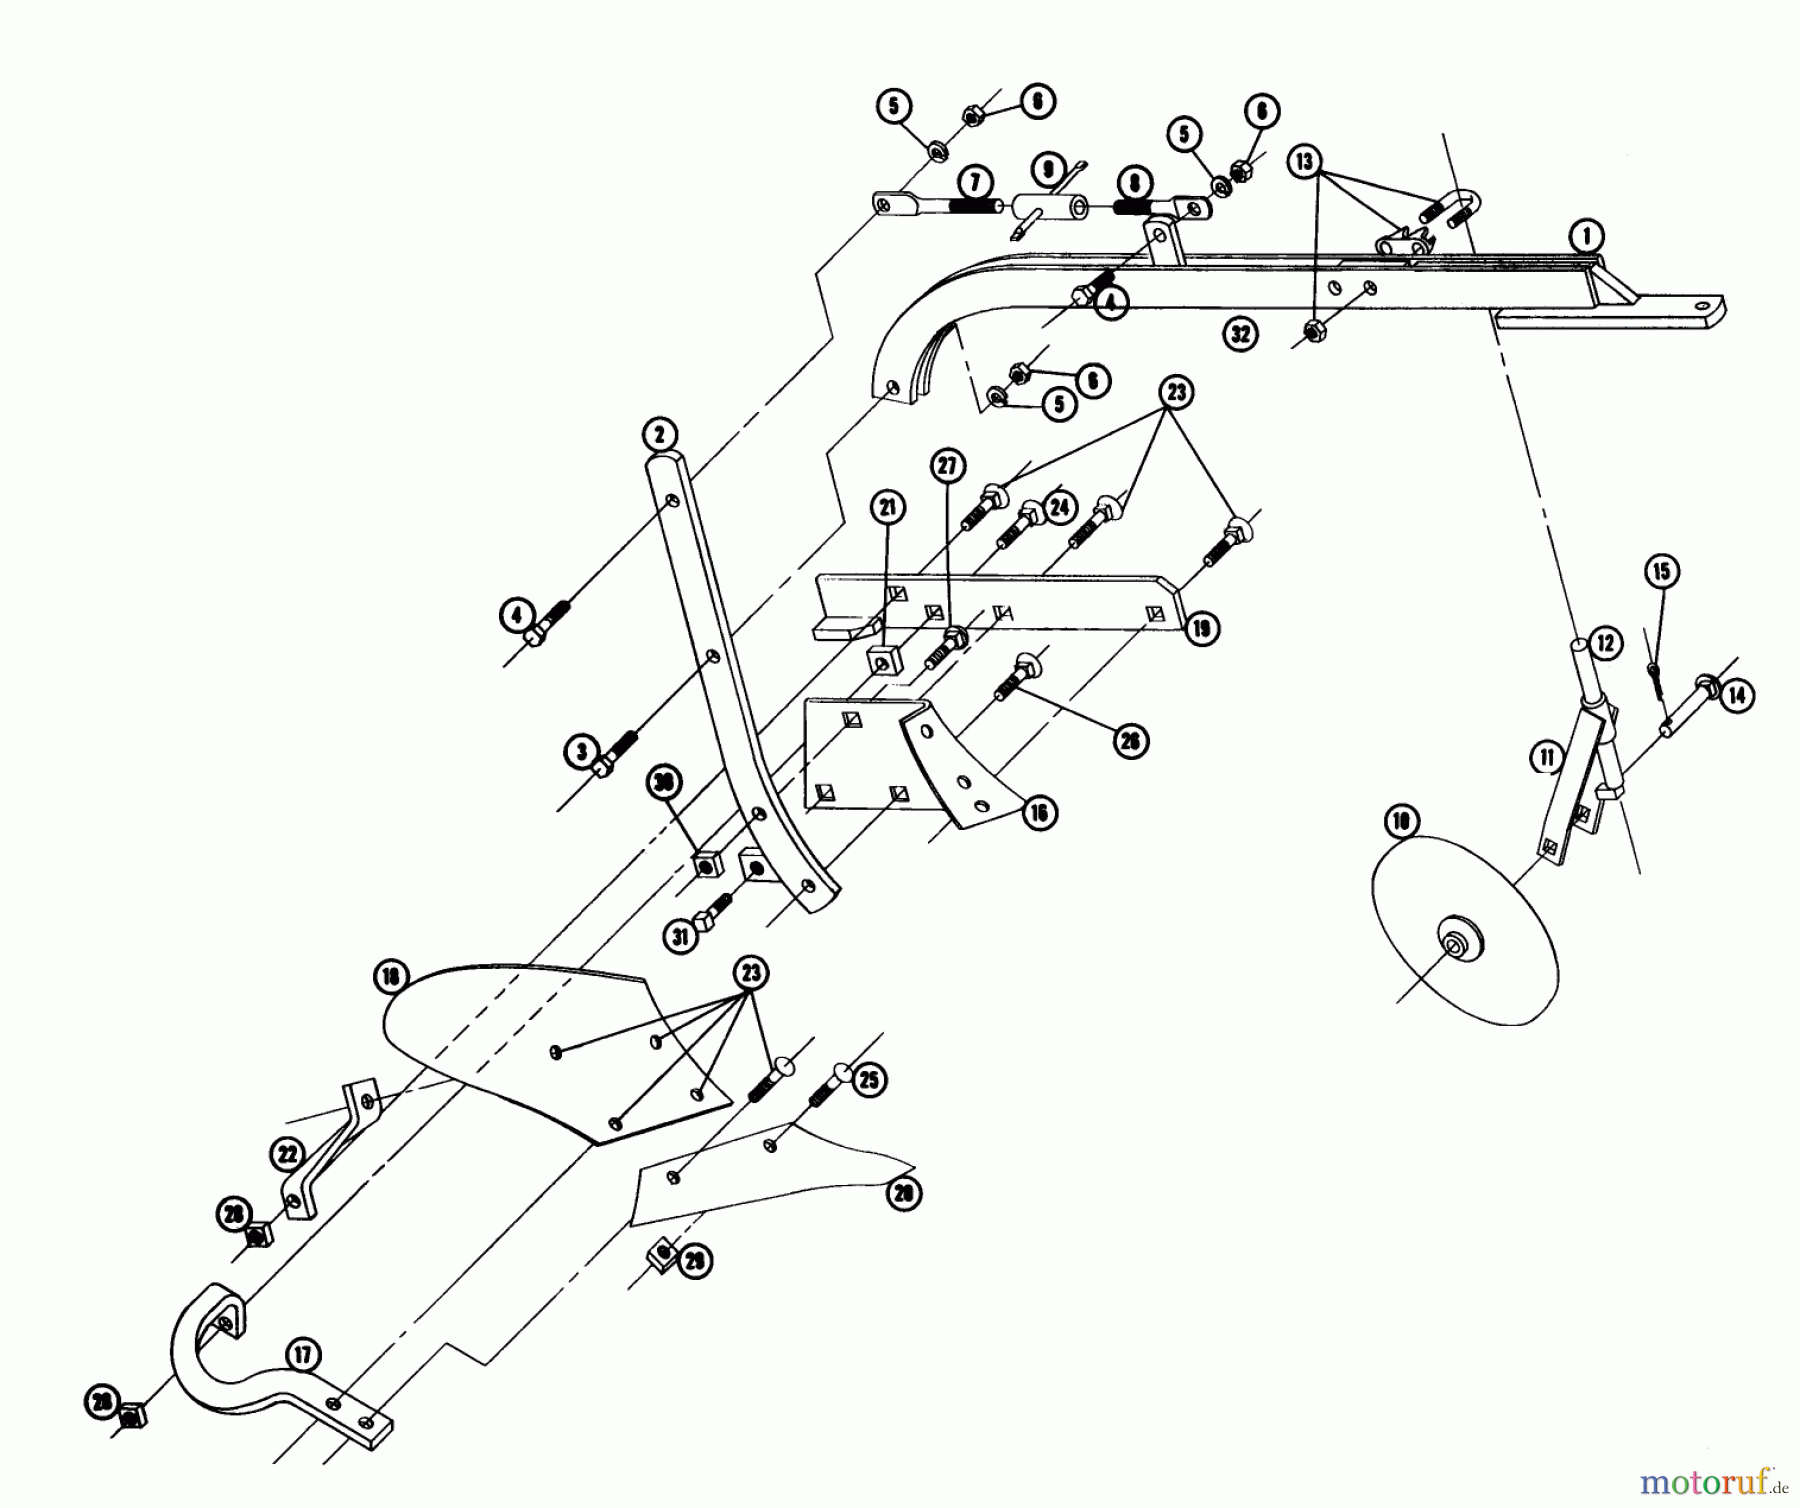  Toro Neu Accessories SC-15 - Toro Aerator, 1960 PLOW & COULTER PP-10HD PARTS LIST